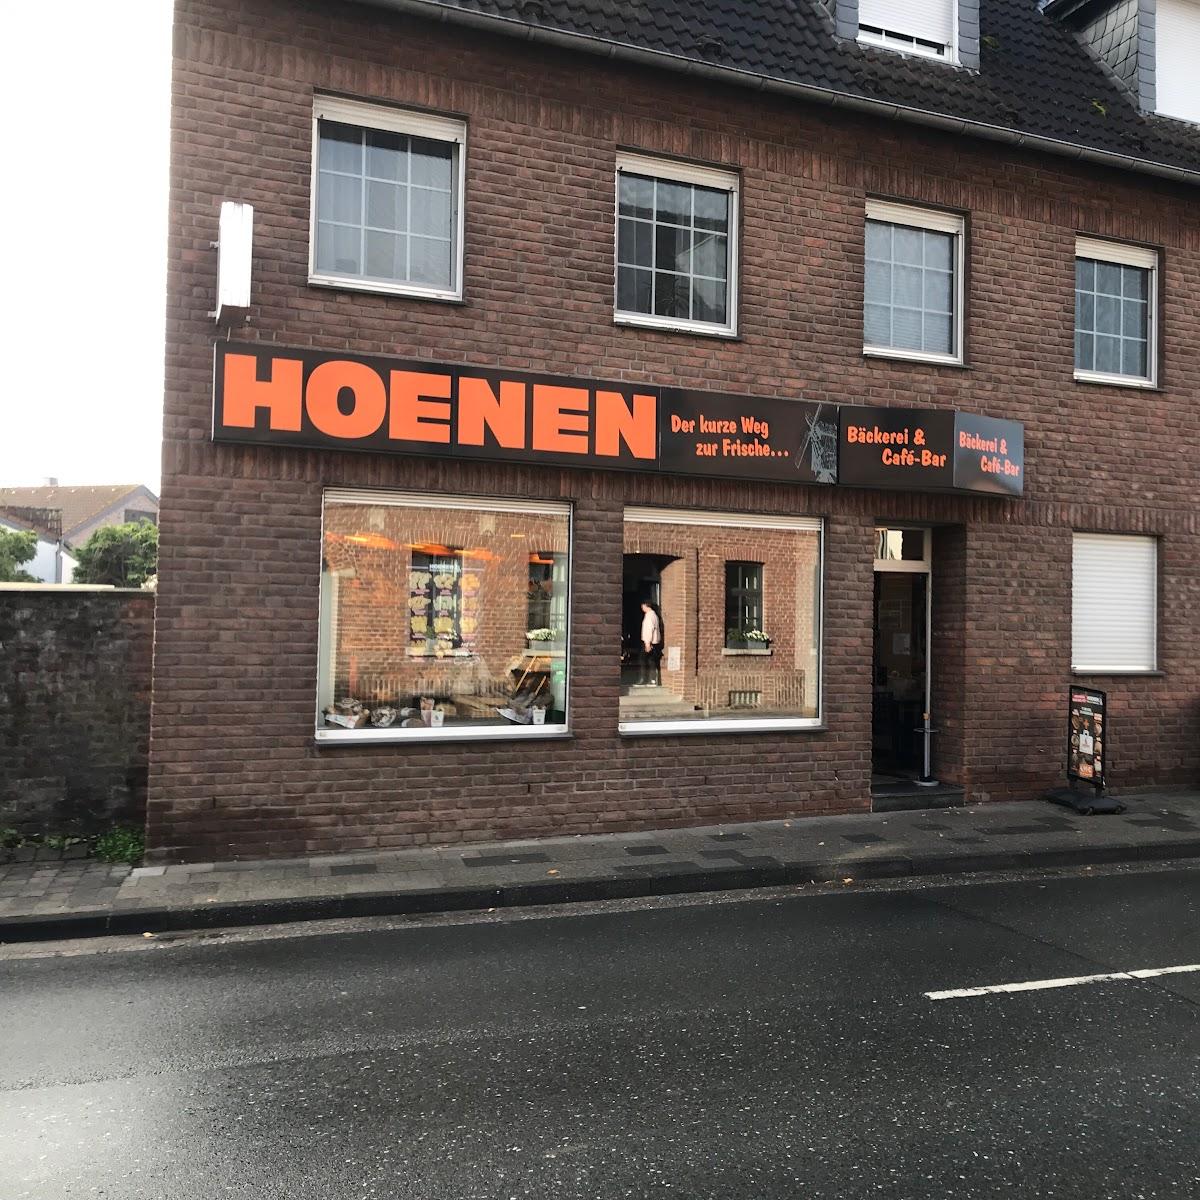 Restaurant "Bäckerei Hoenen" in Rheurdt